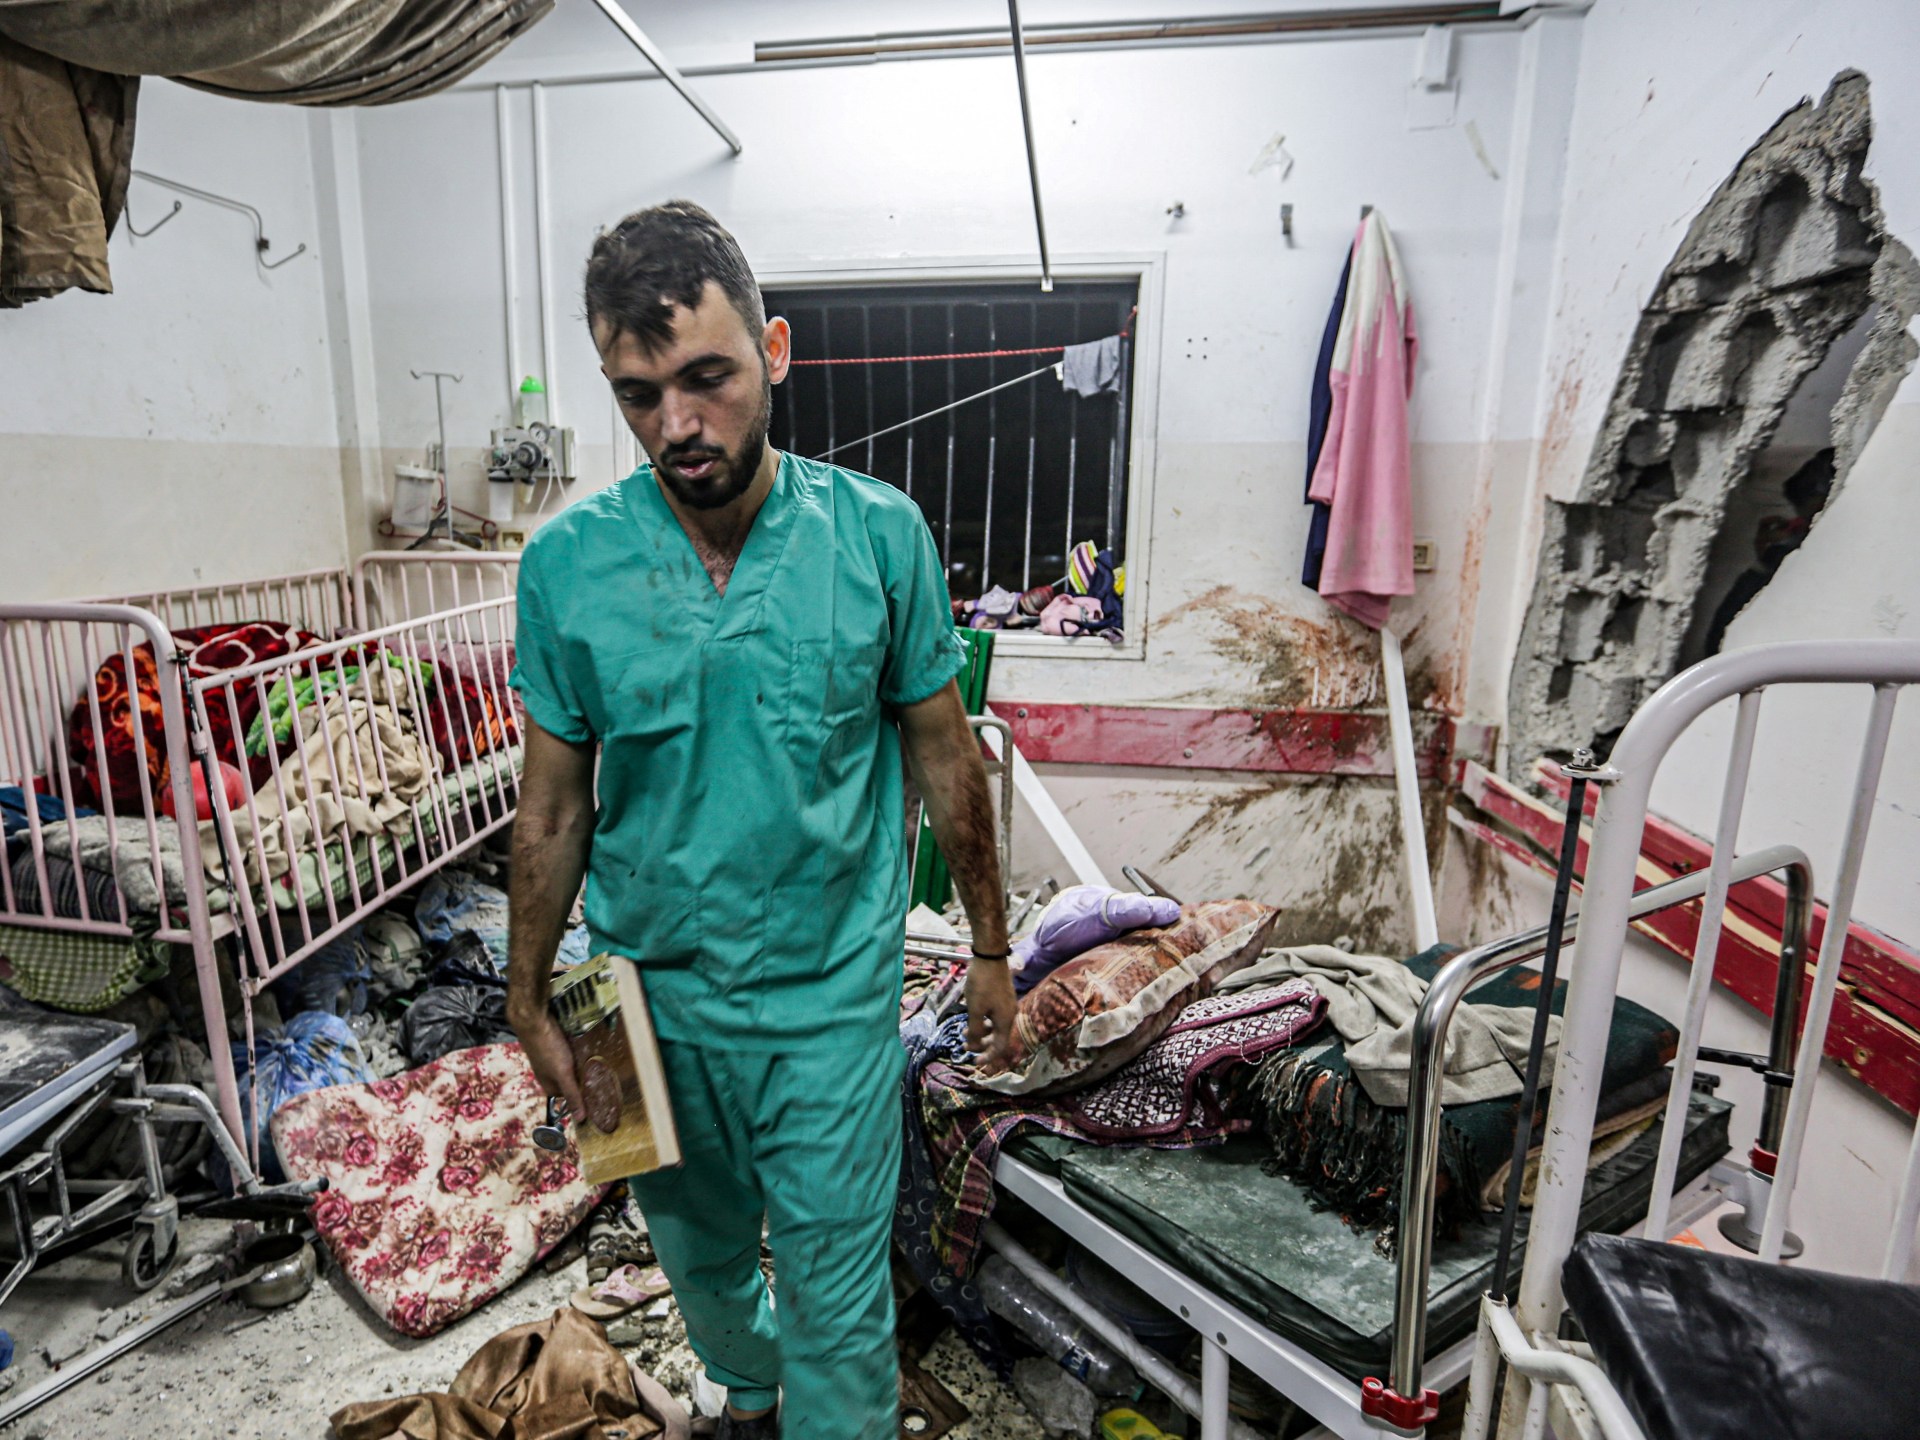 ‘Bloodbath’: Israel continues to target Gaza hospitals and civilians | News